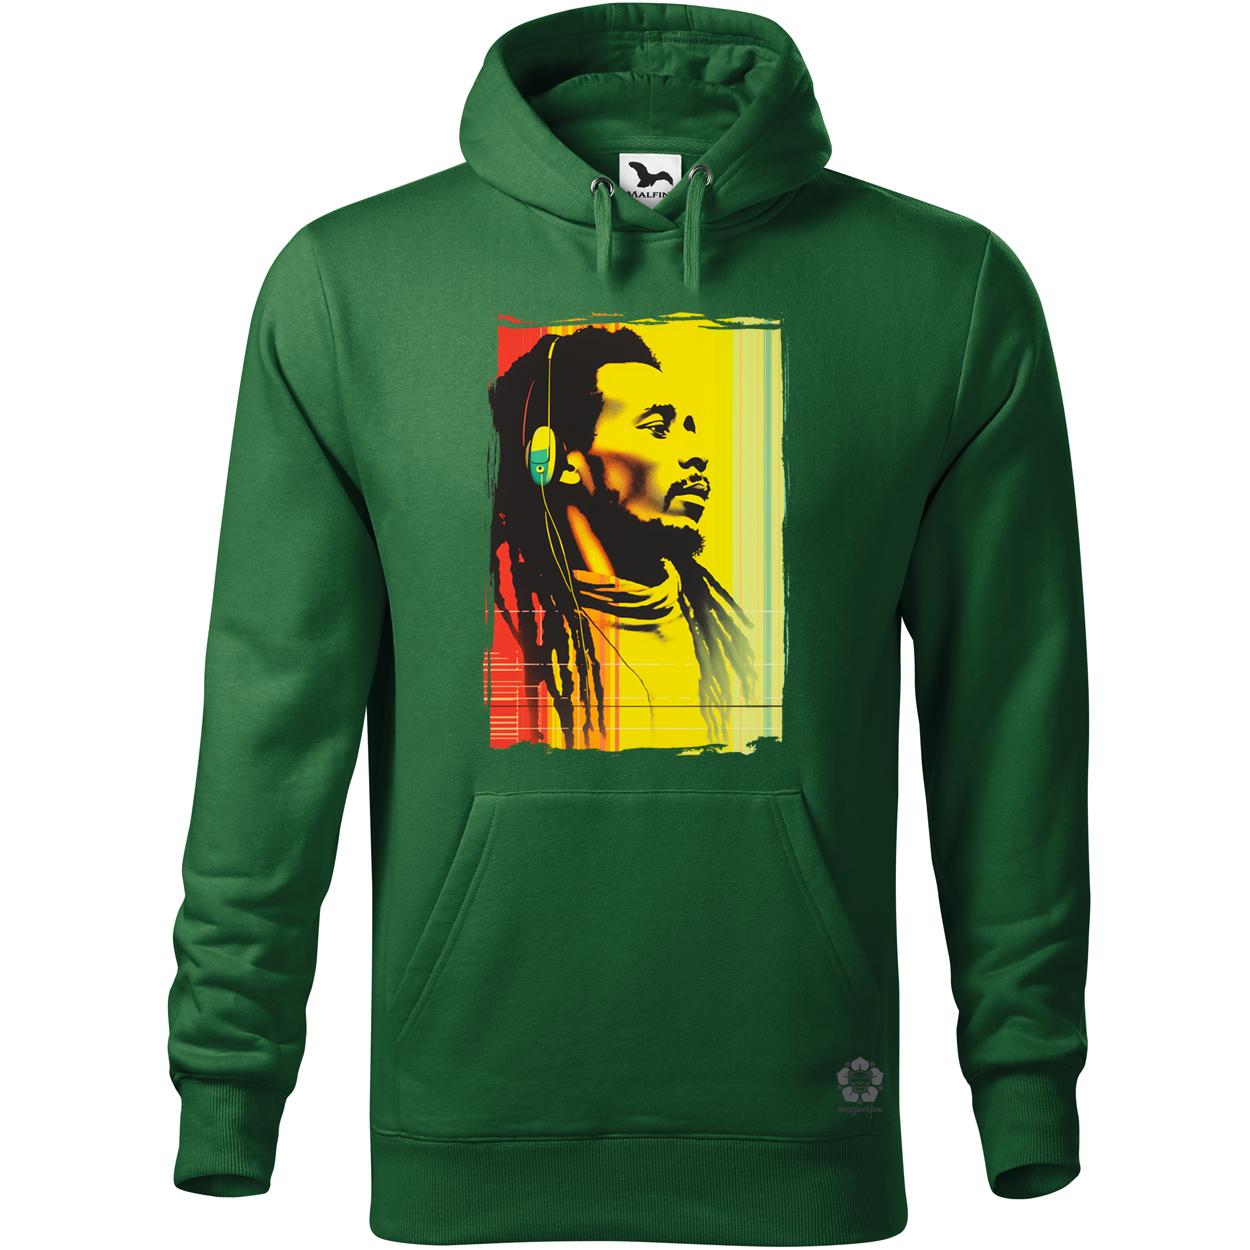 Bob Marley v2